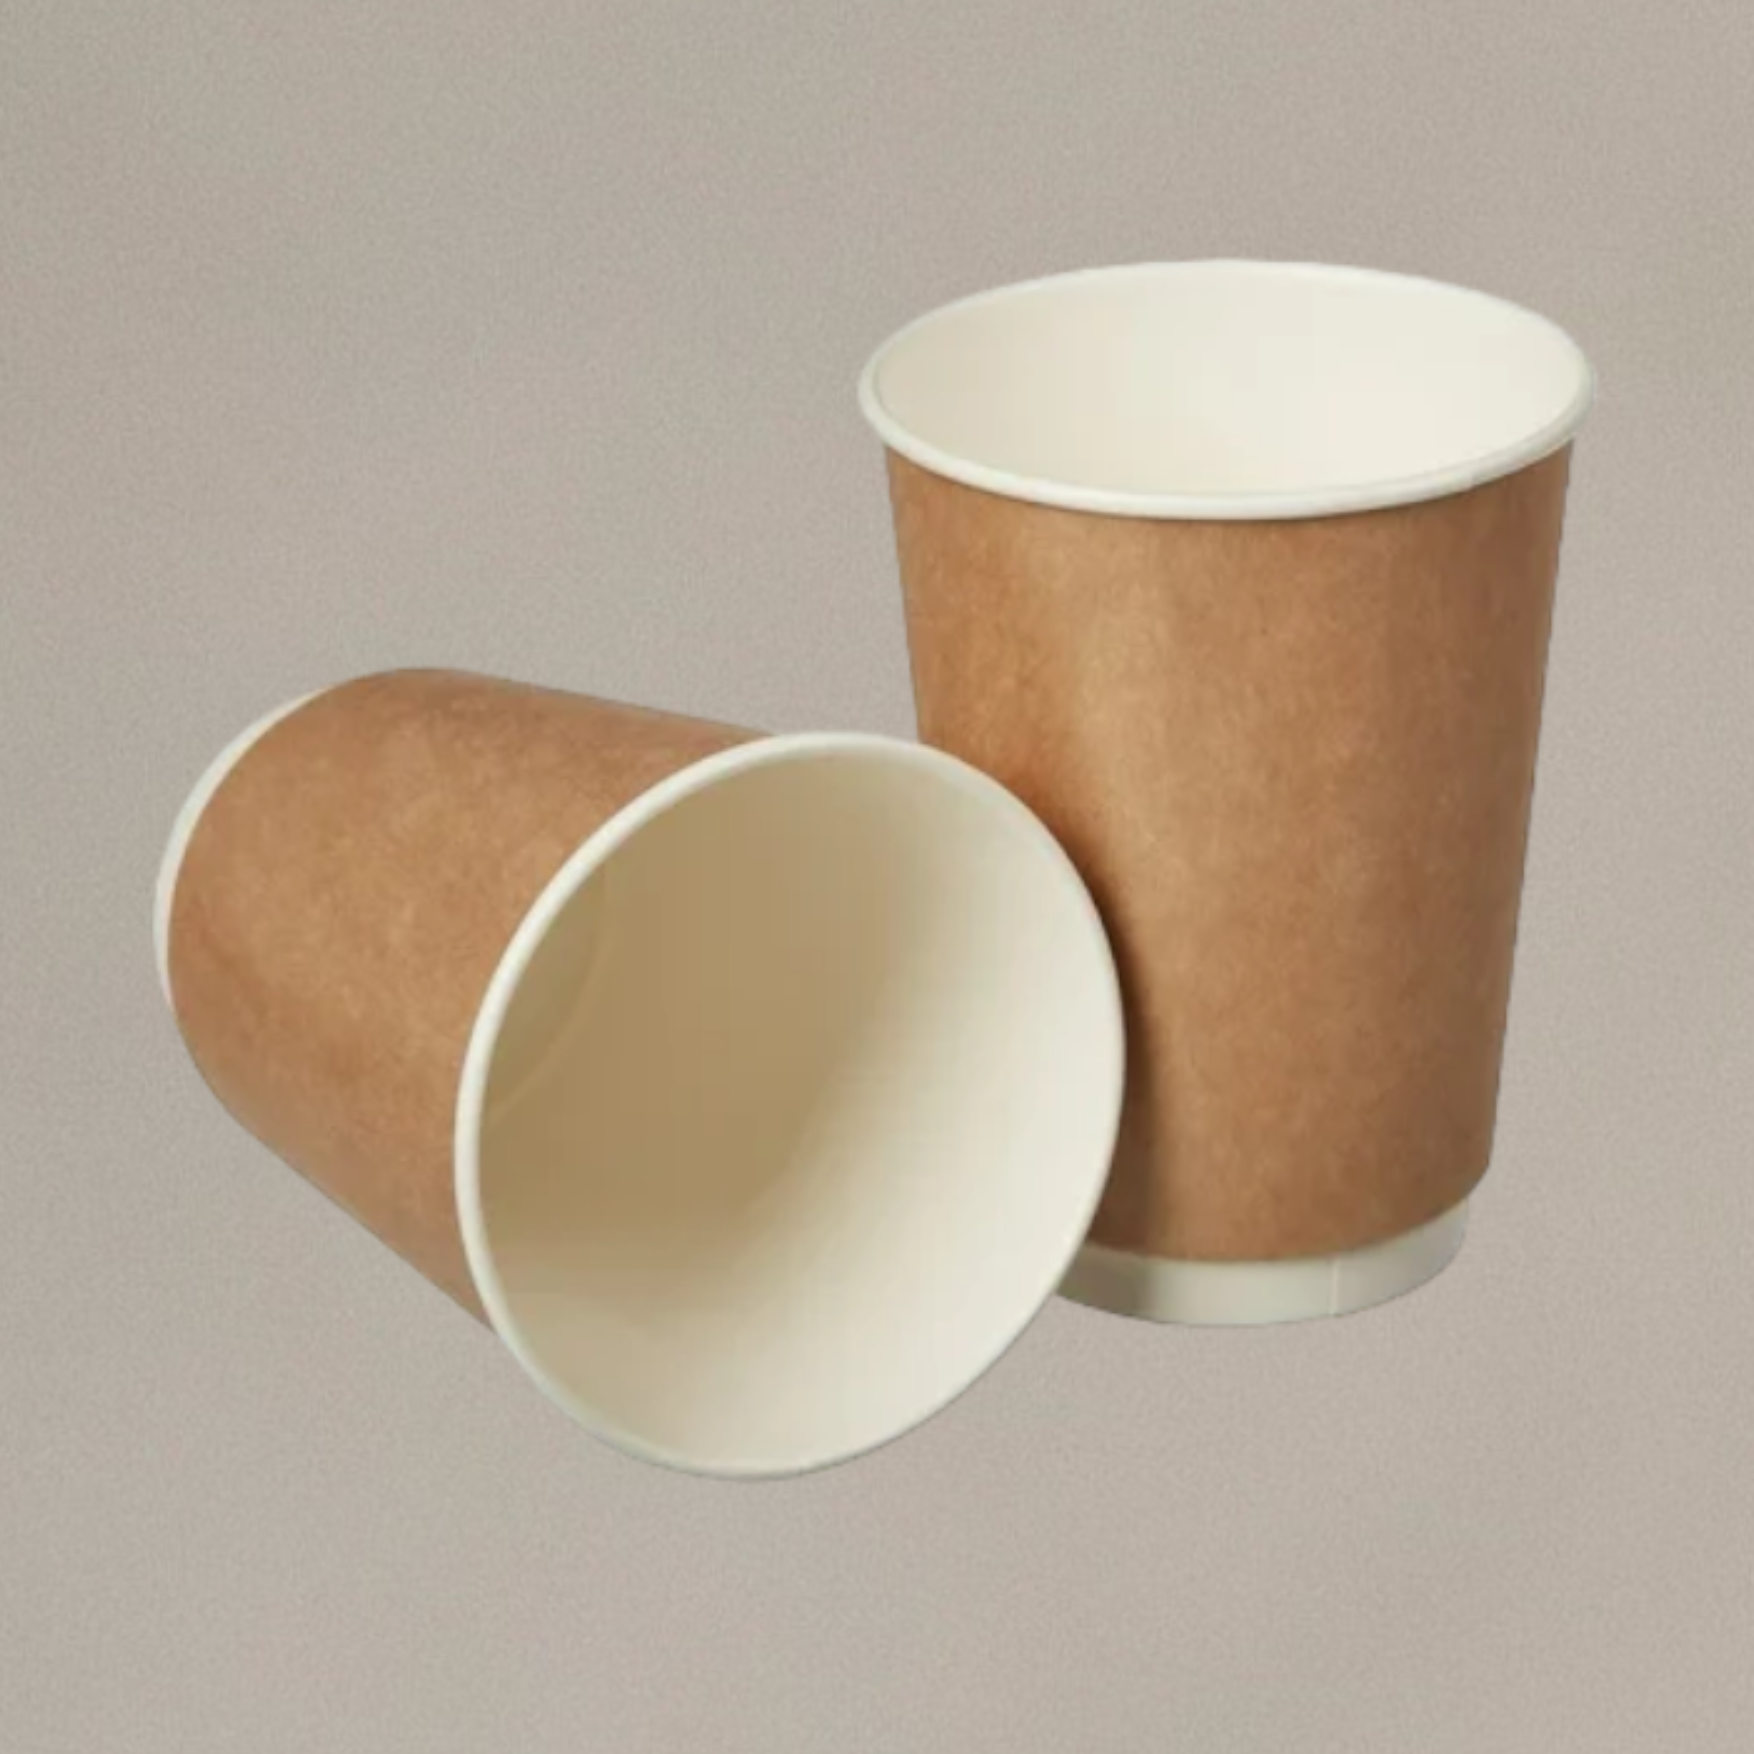 Buy Kraft Paper Coffee Cups 16 Oz in Bulk Canada